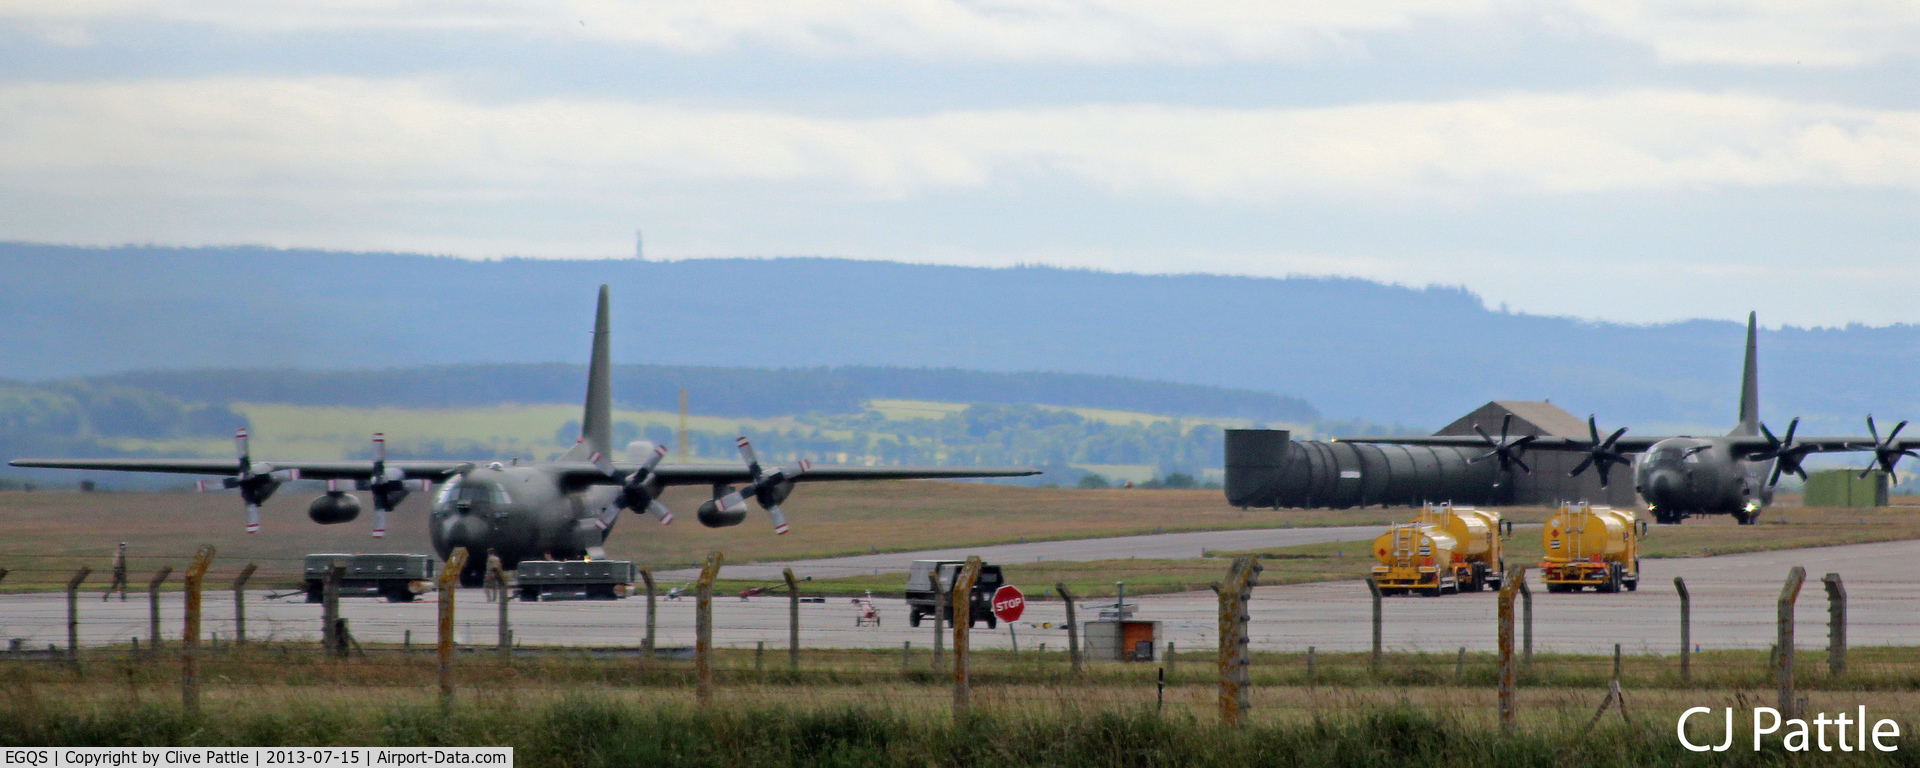 RAF Lossiemouth Airport, Lossiemouth, Scotland United Kingdom (EGQS) - Two RAF Hercules taxy on the airfield